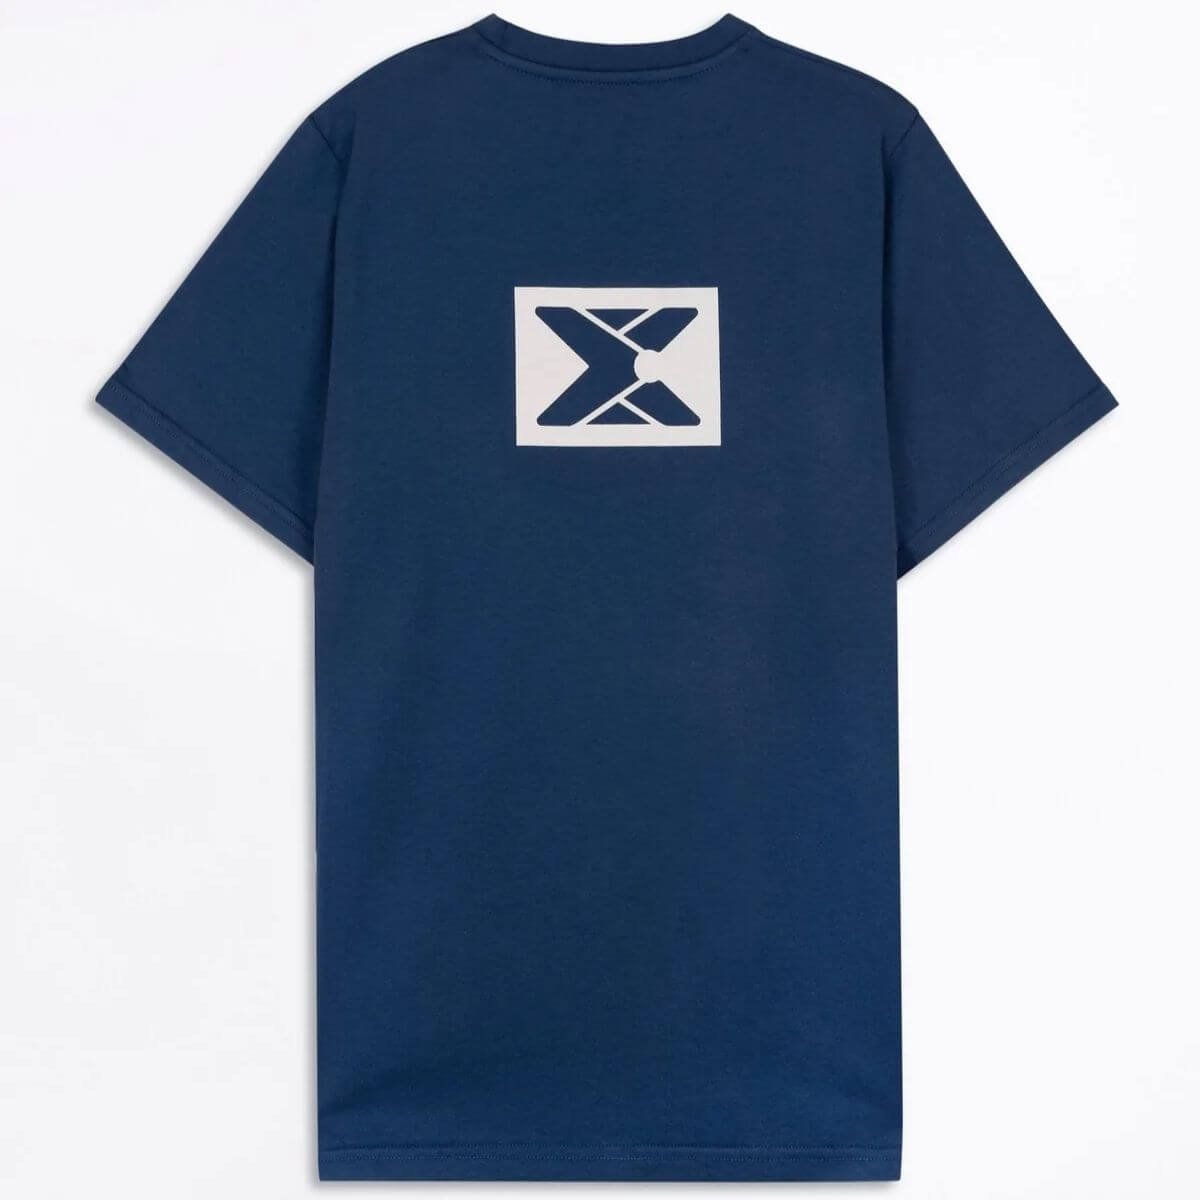 Camiseta deportiva hombre TEAM REGULAR azul marino – NOX